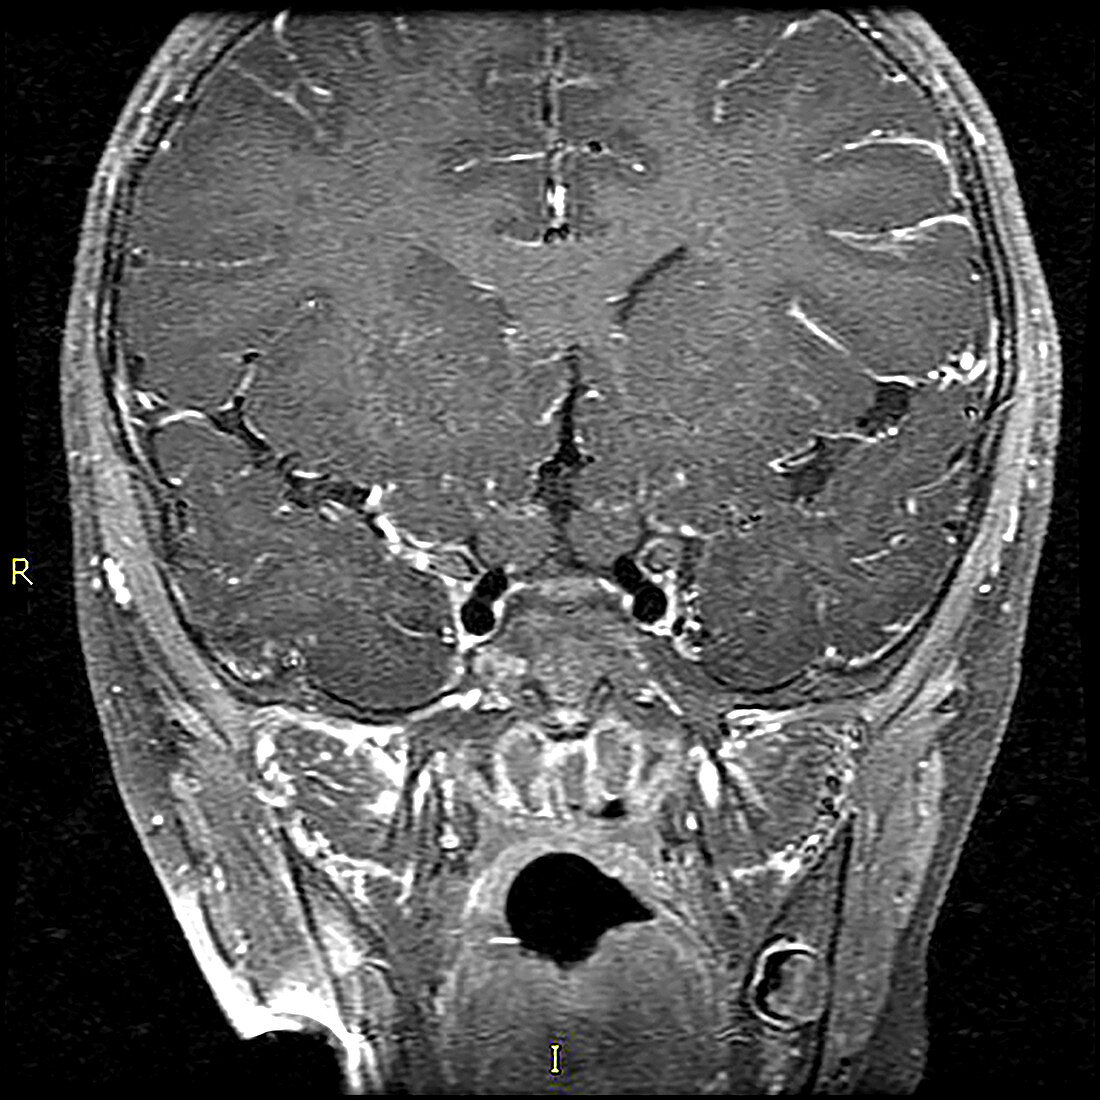 Neurofibromatosis type I (NF1), MRI